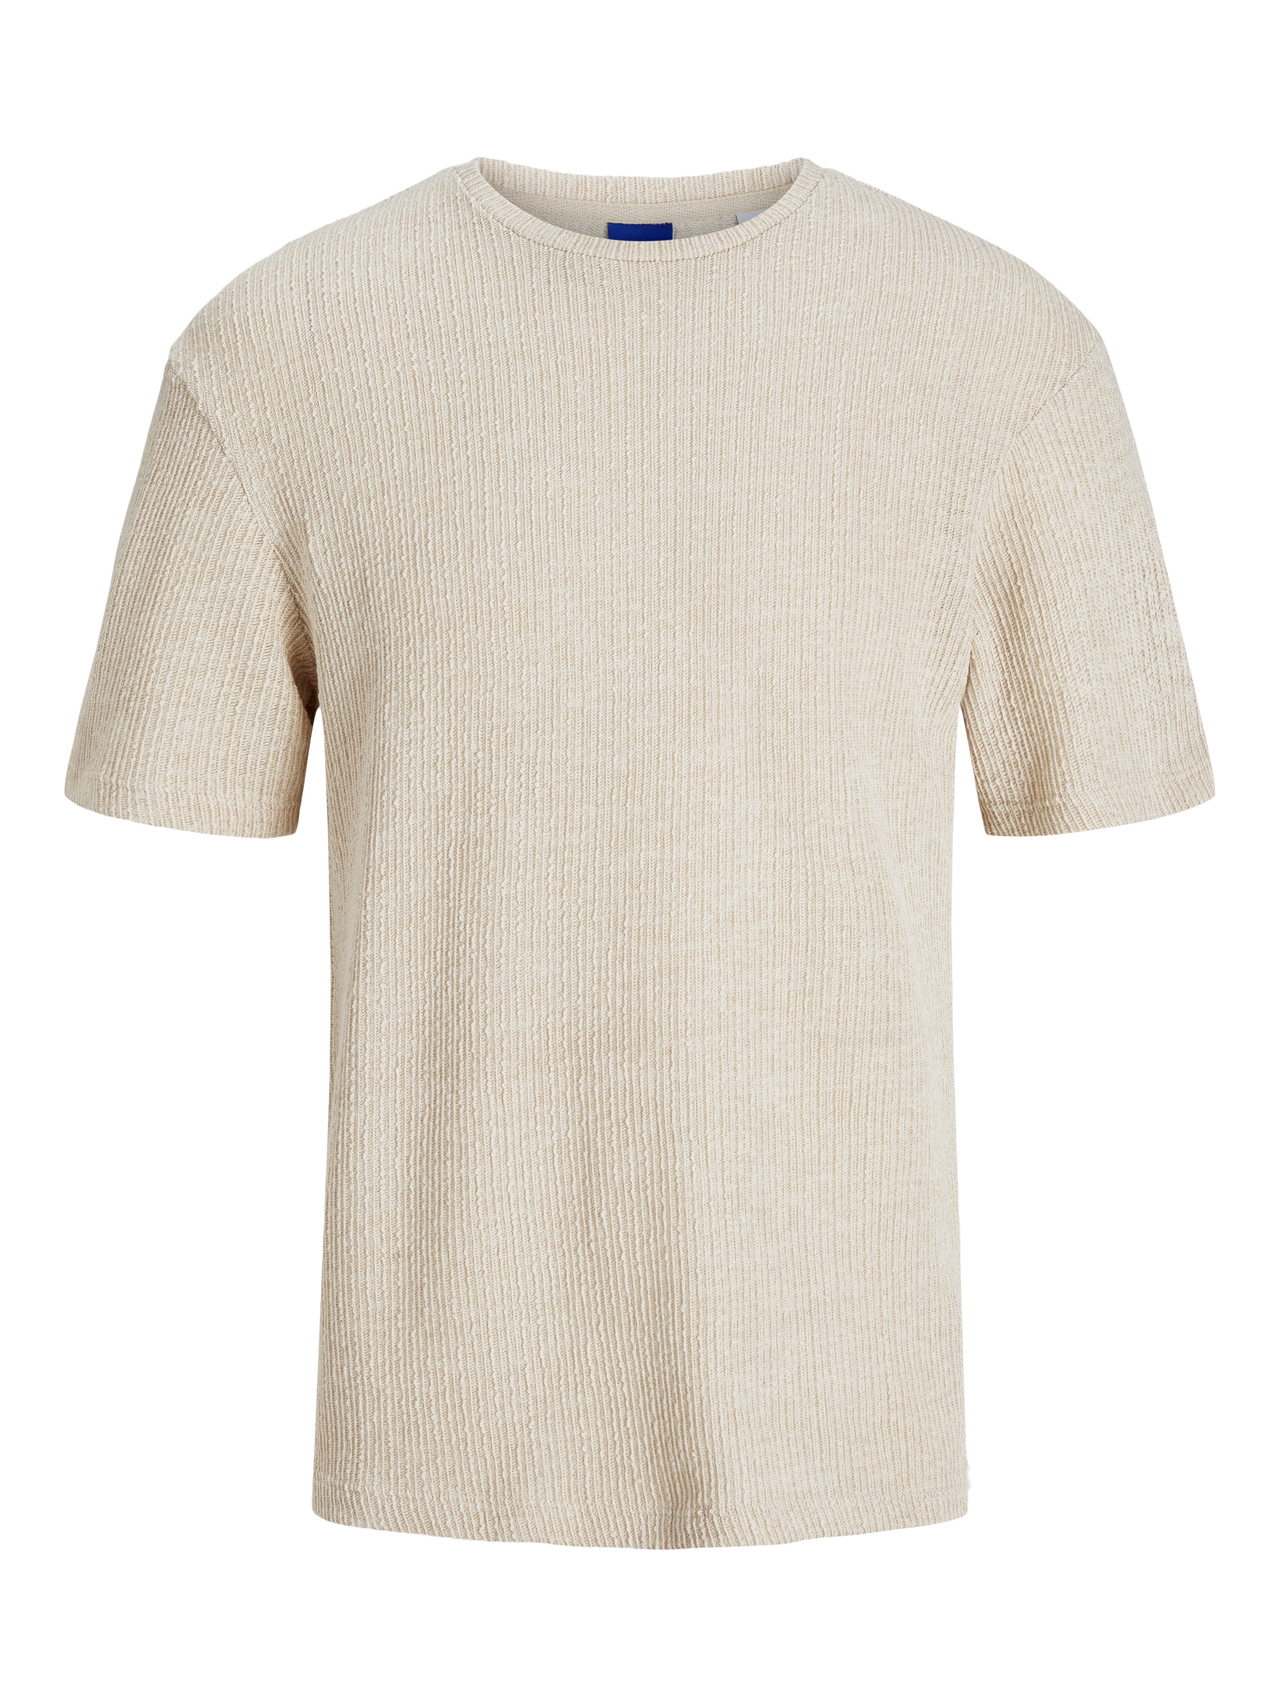 Jack & Jones T-shirt Imprimé Col rond -Ecru - 12274493